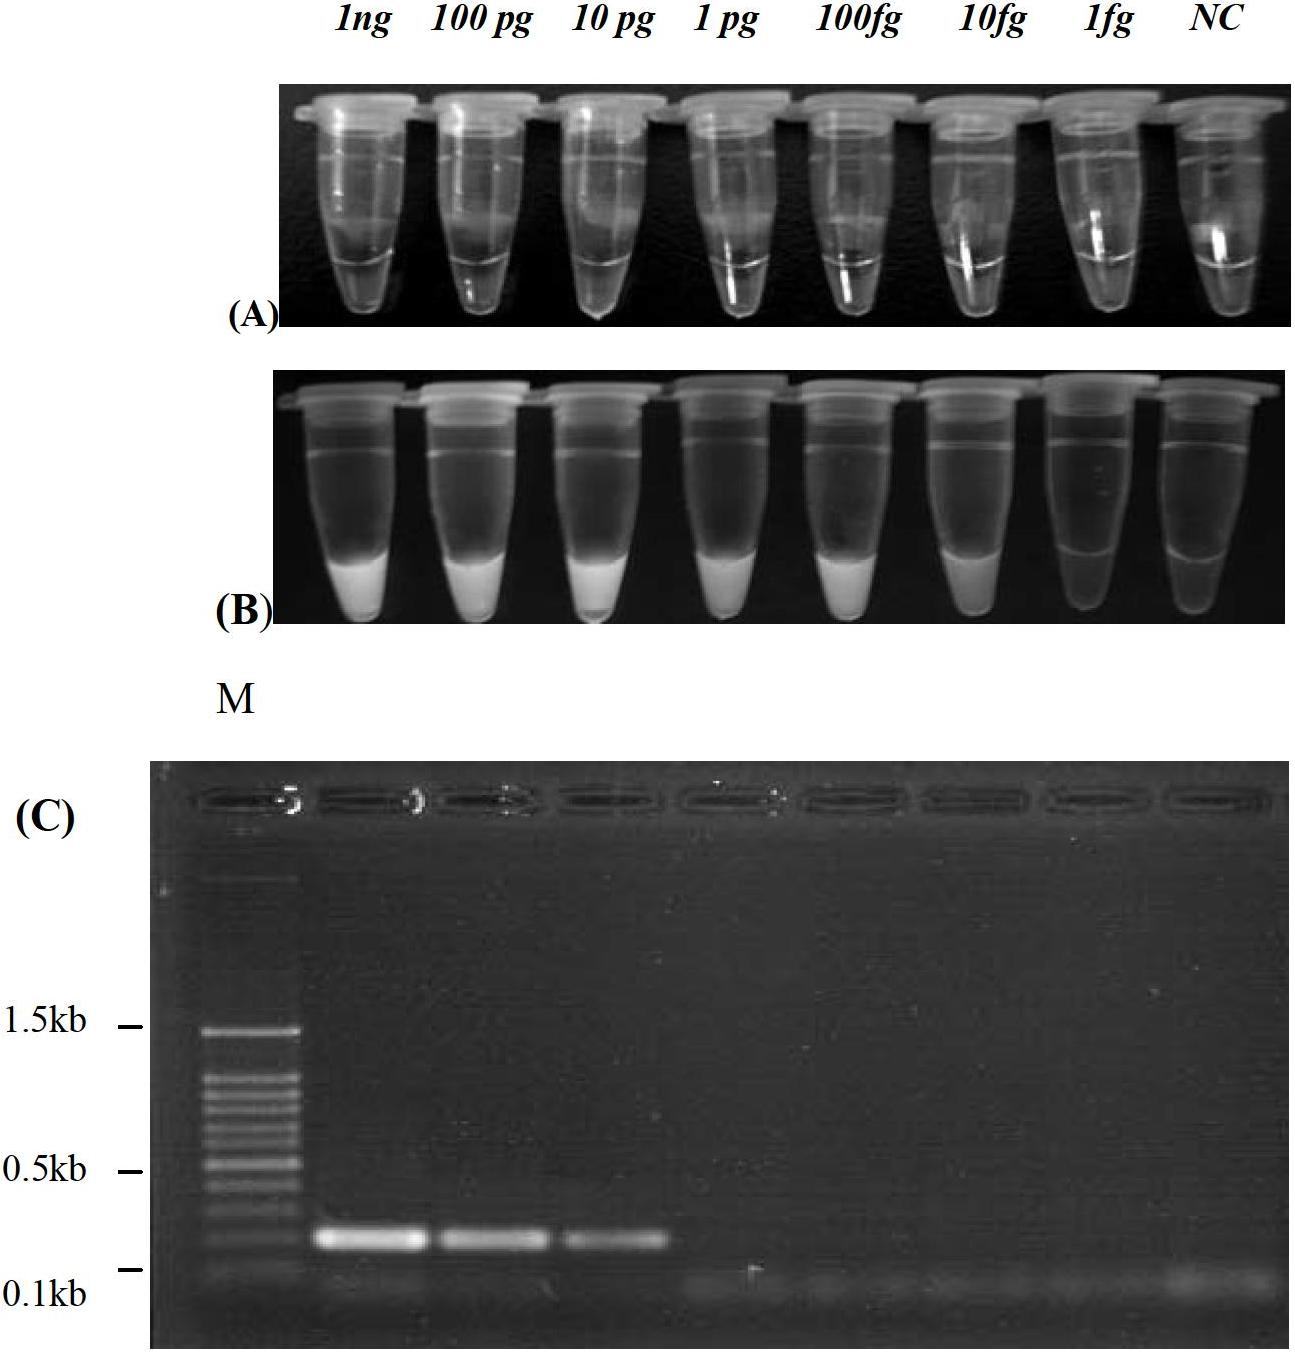 RT-LAMP (reverse transcription loop-mediated isothermal amplification) visual detection kit for H1N1 subtype avian influenza viruses